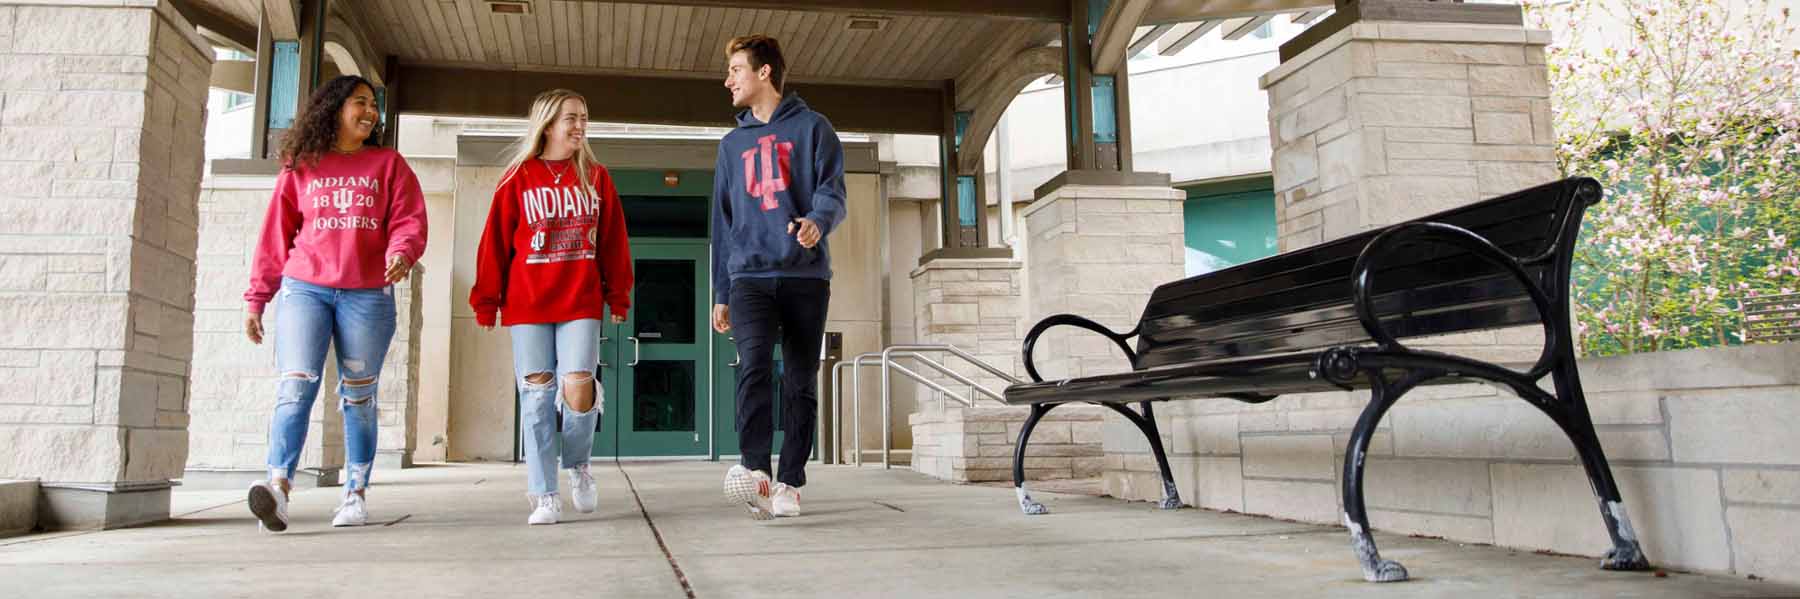 Three students walk outside in IU gear.